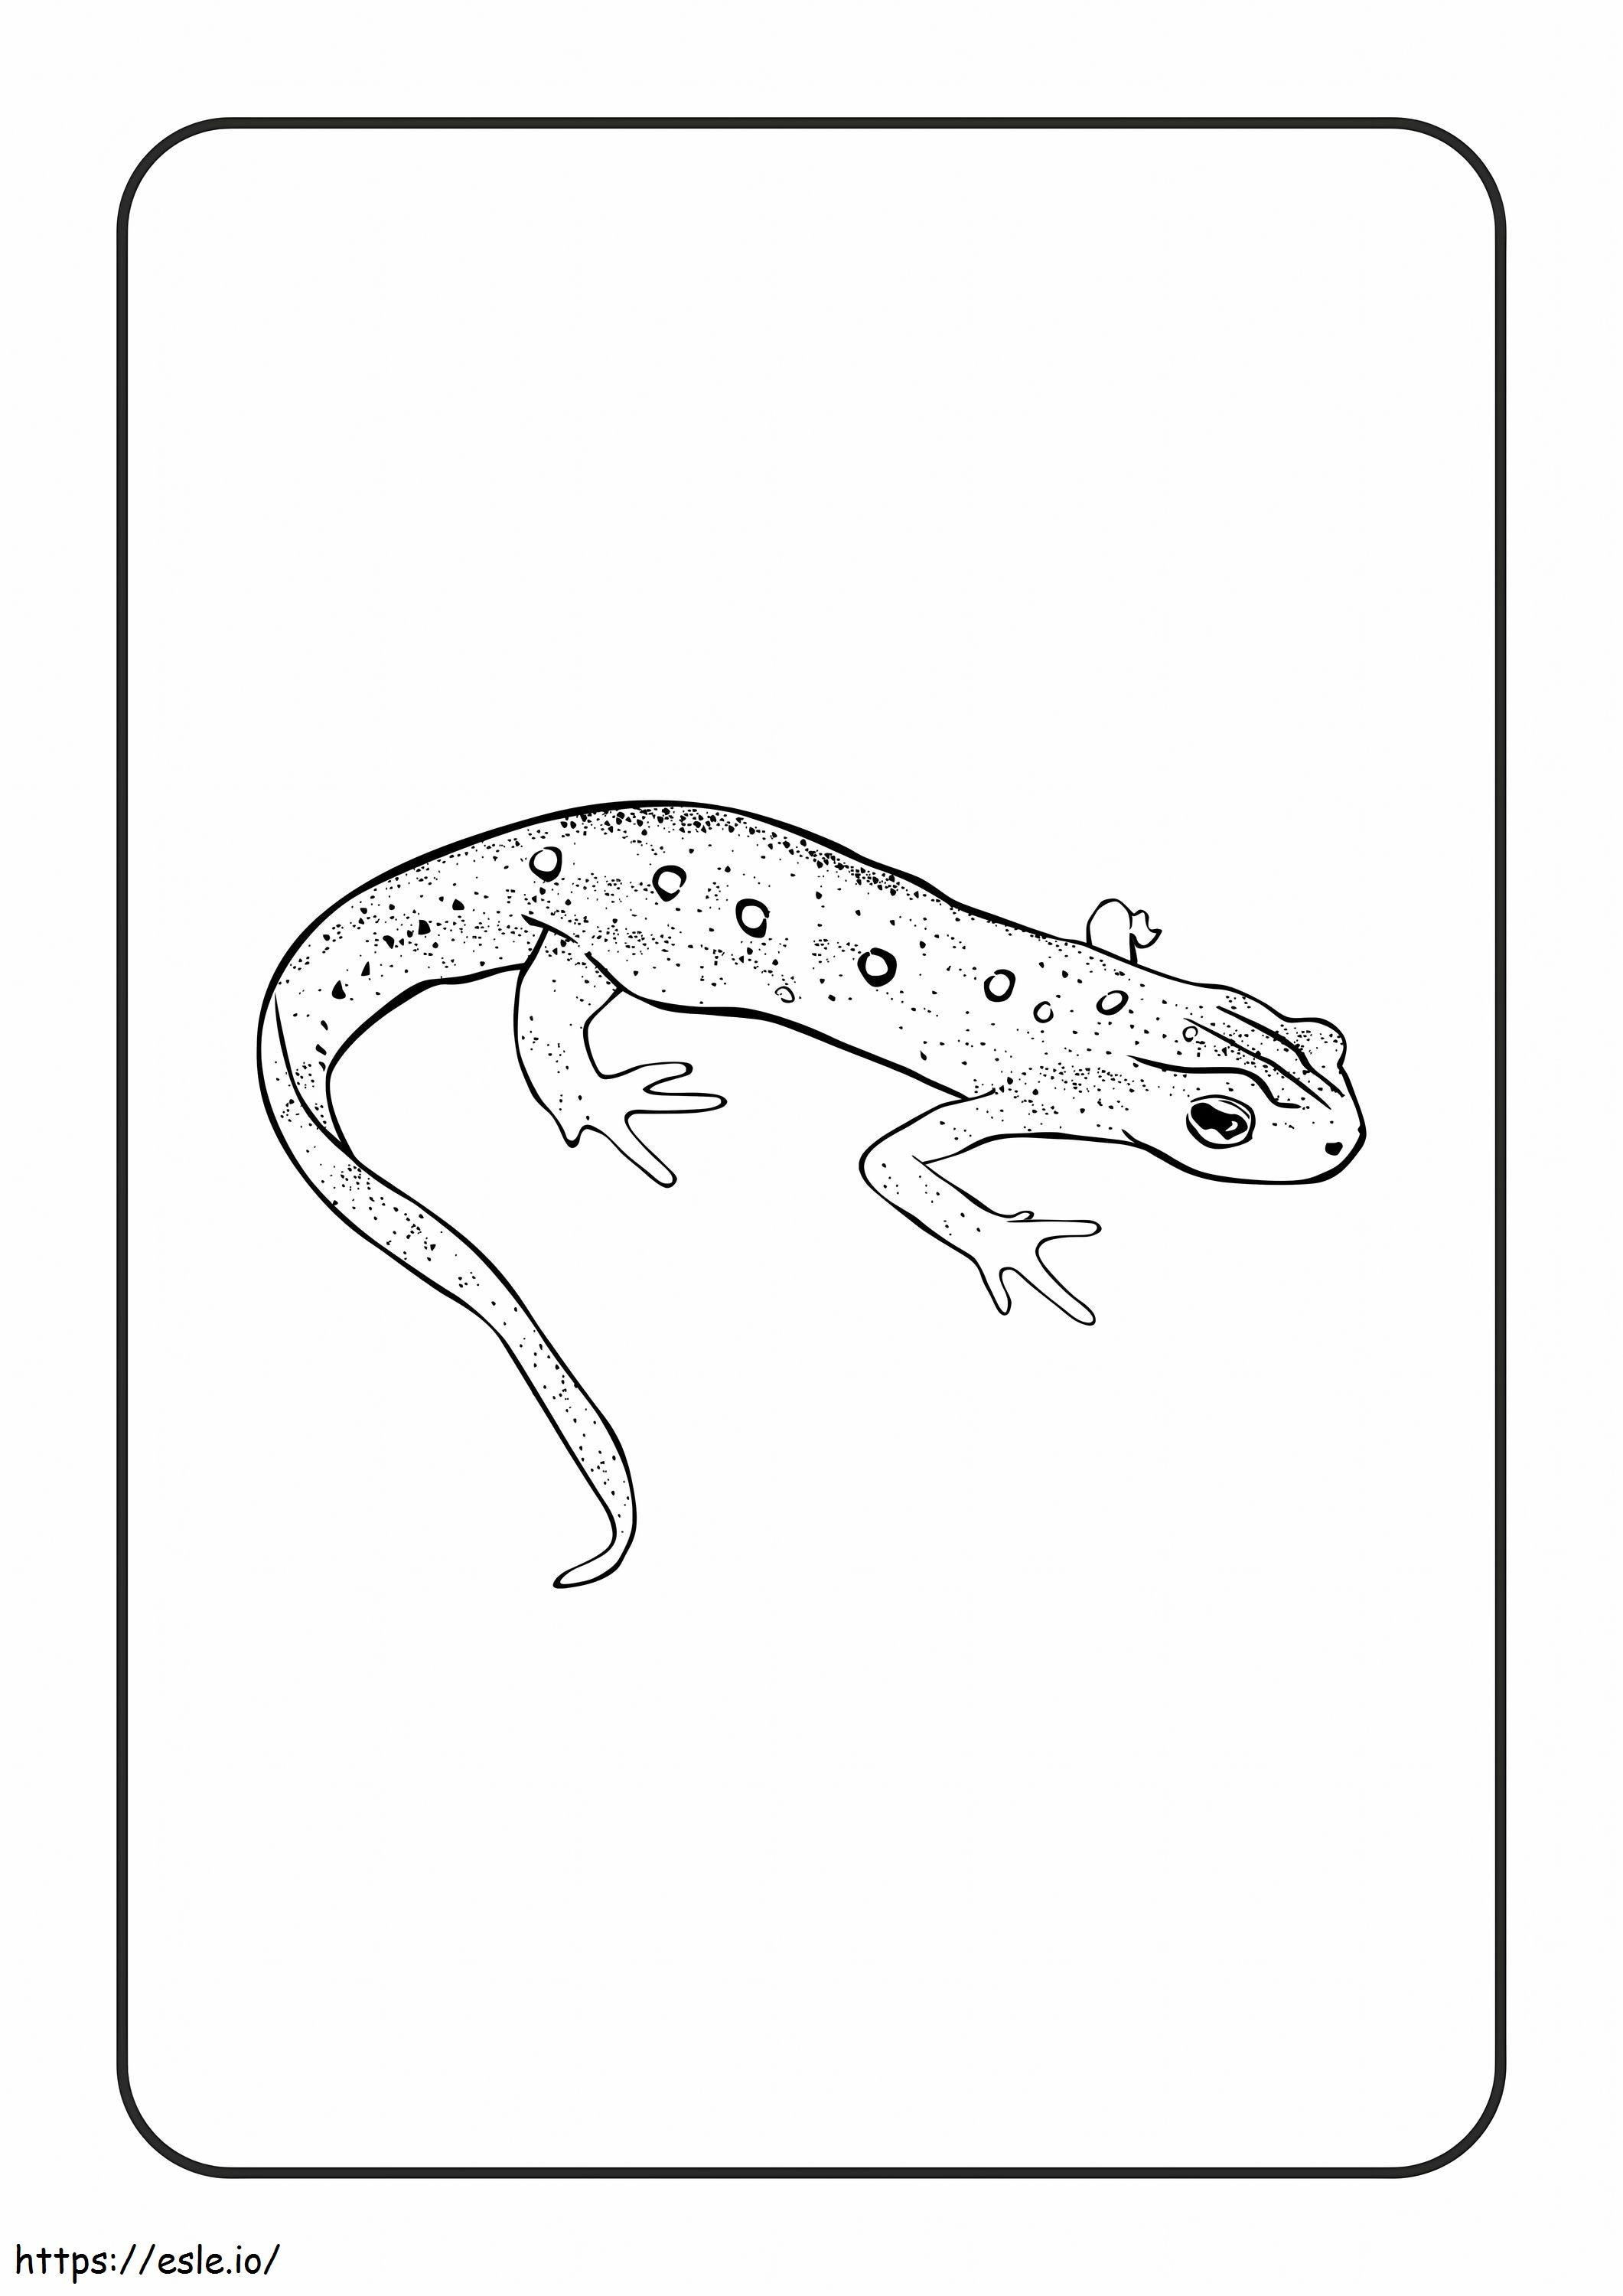 Reptile de triton de Est de colorat